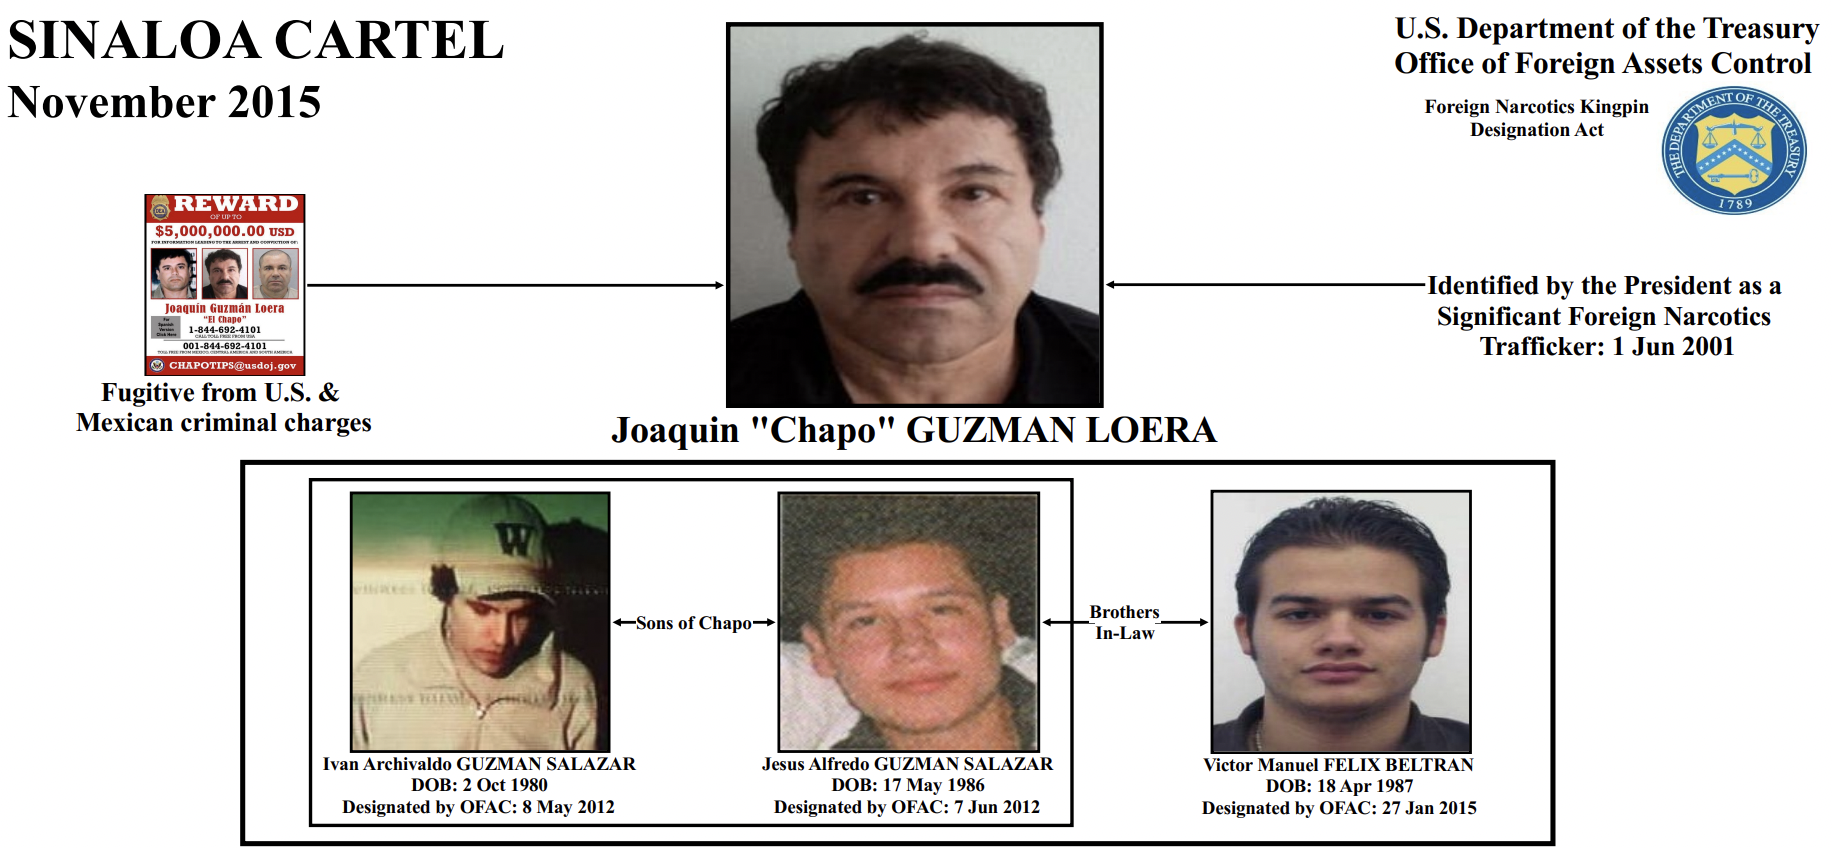 Sinaloa cartel leadership chart